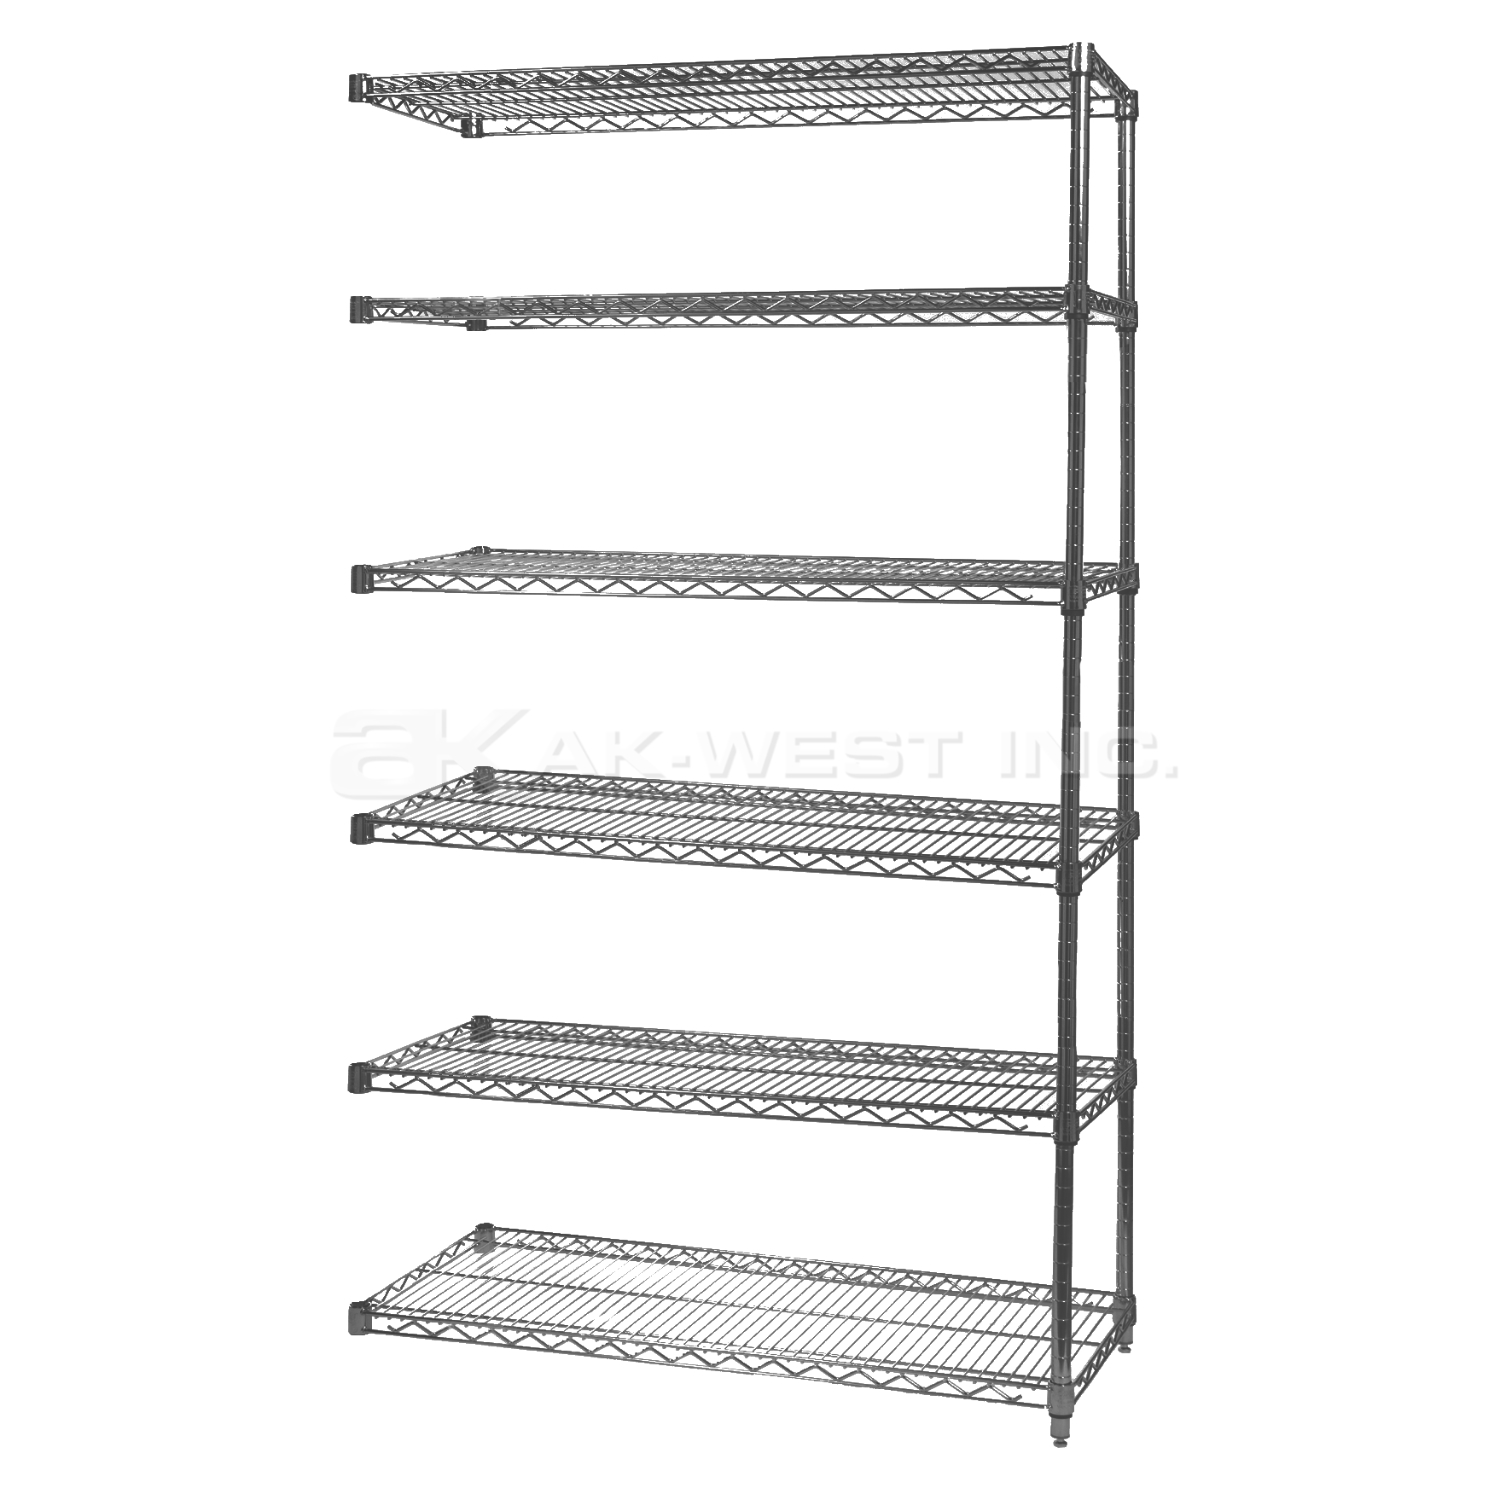 Grey, 12"D x 48"W x 96"H, 6 Shelf, Wire Shelving Adder Kit